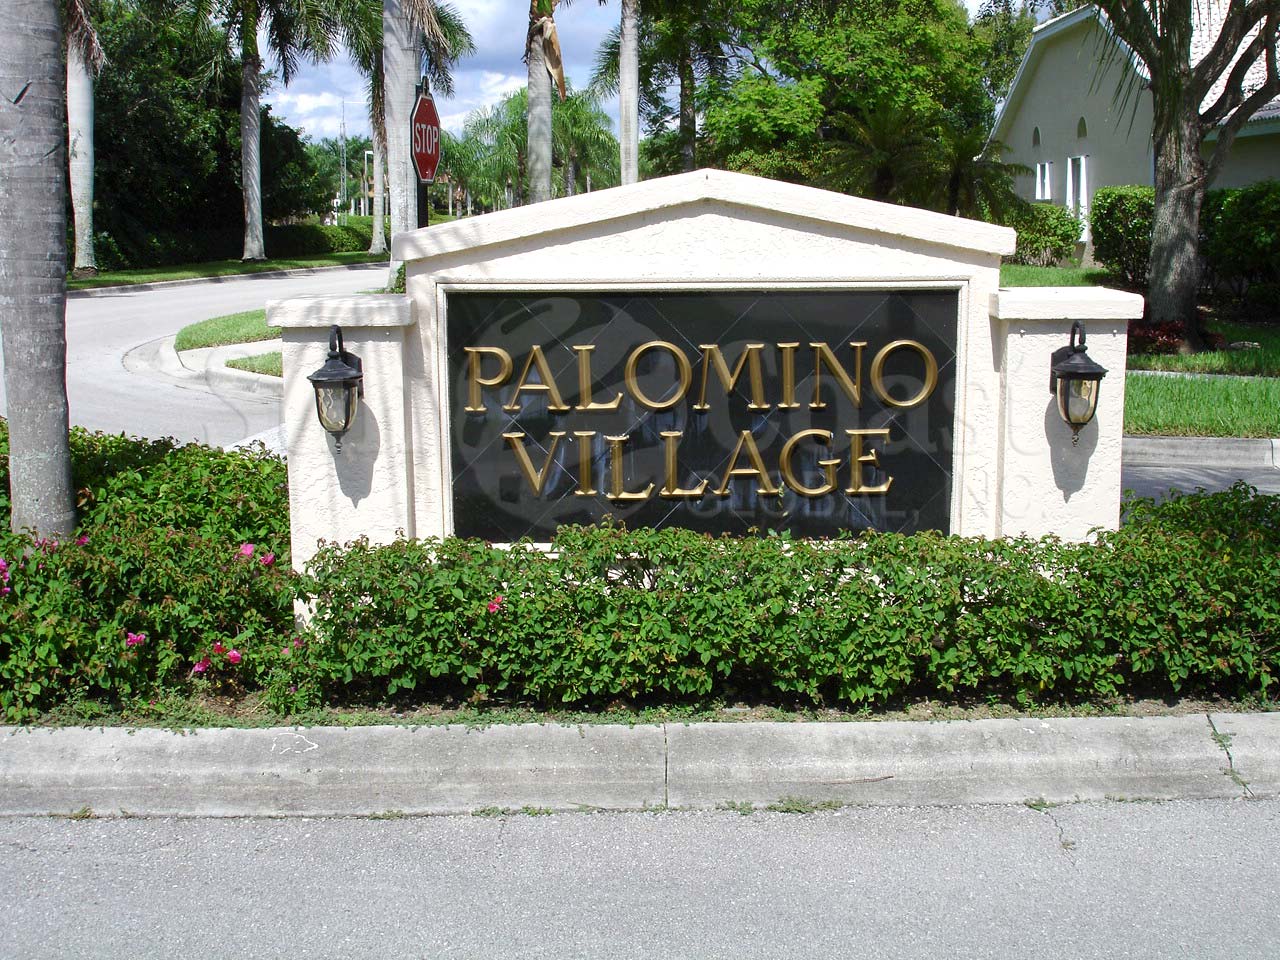 Palomino Village signage